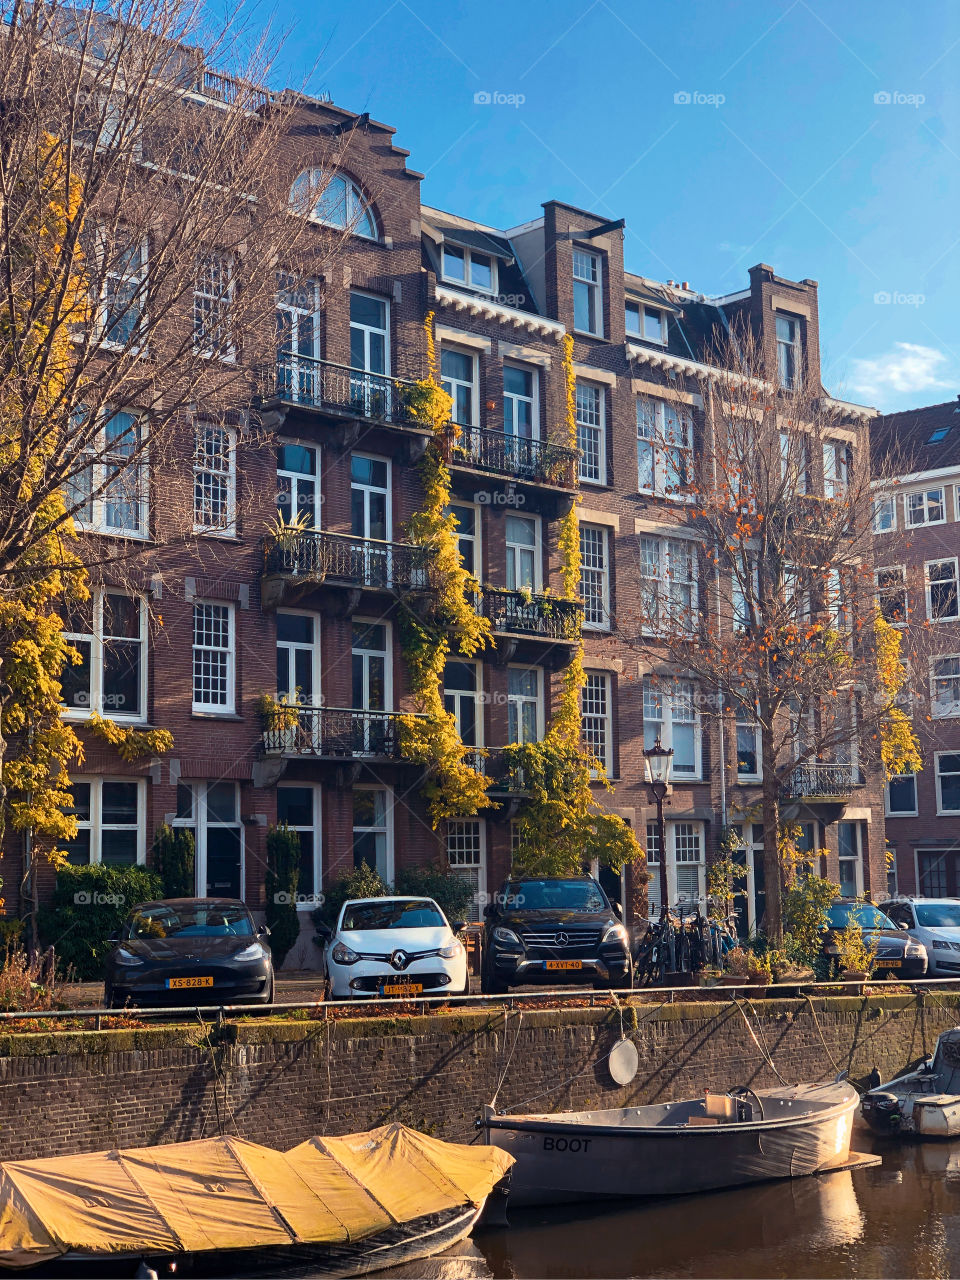 Amsterdam houses 🏡